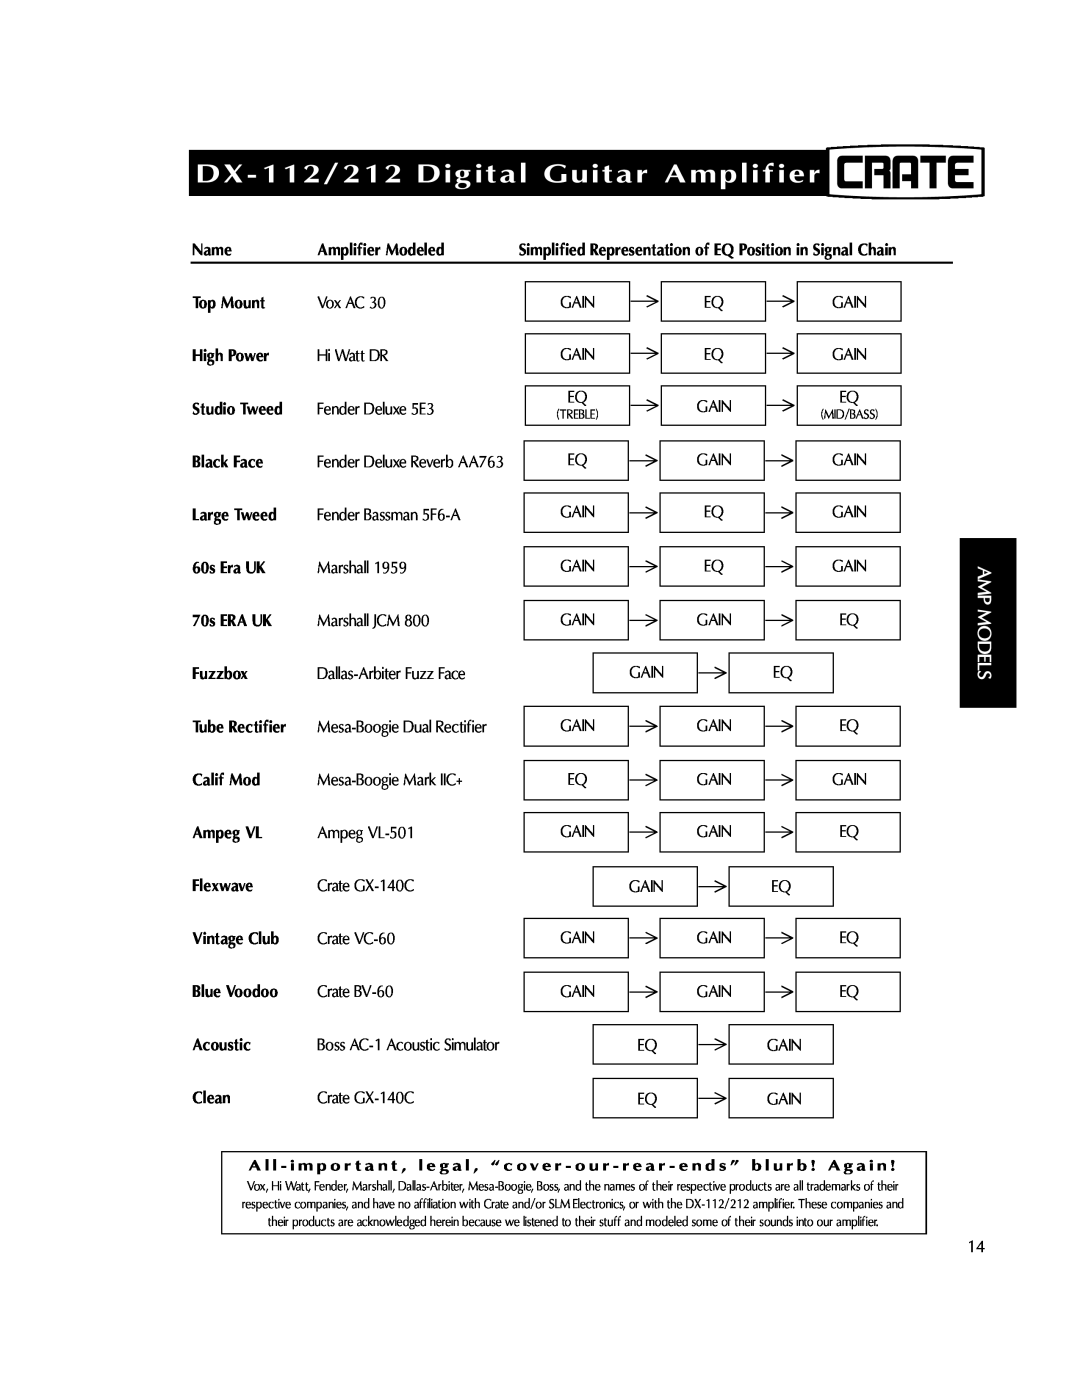 Crate Amplifiers DX-212 manual DX-112/212Digital Guitar Amplifier, Amp Models, Name 